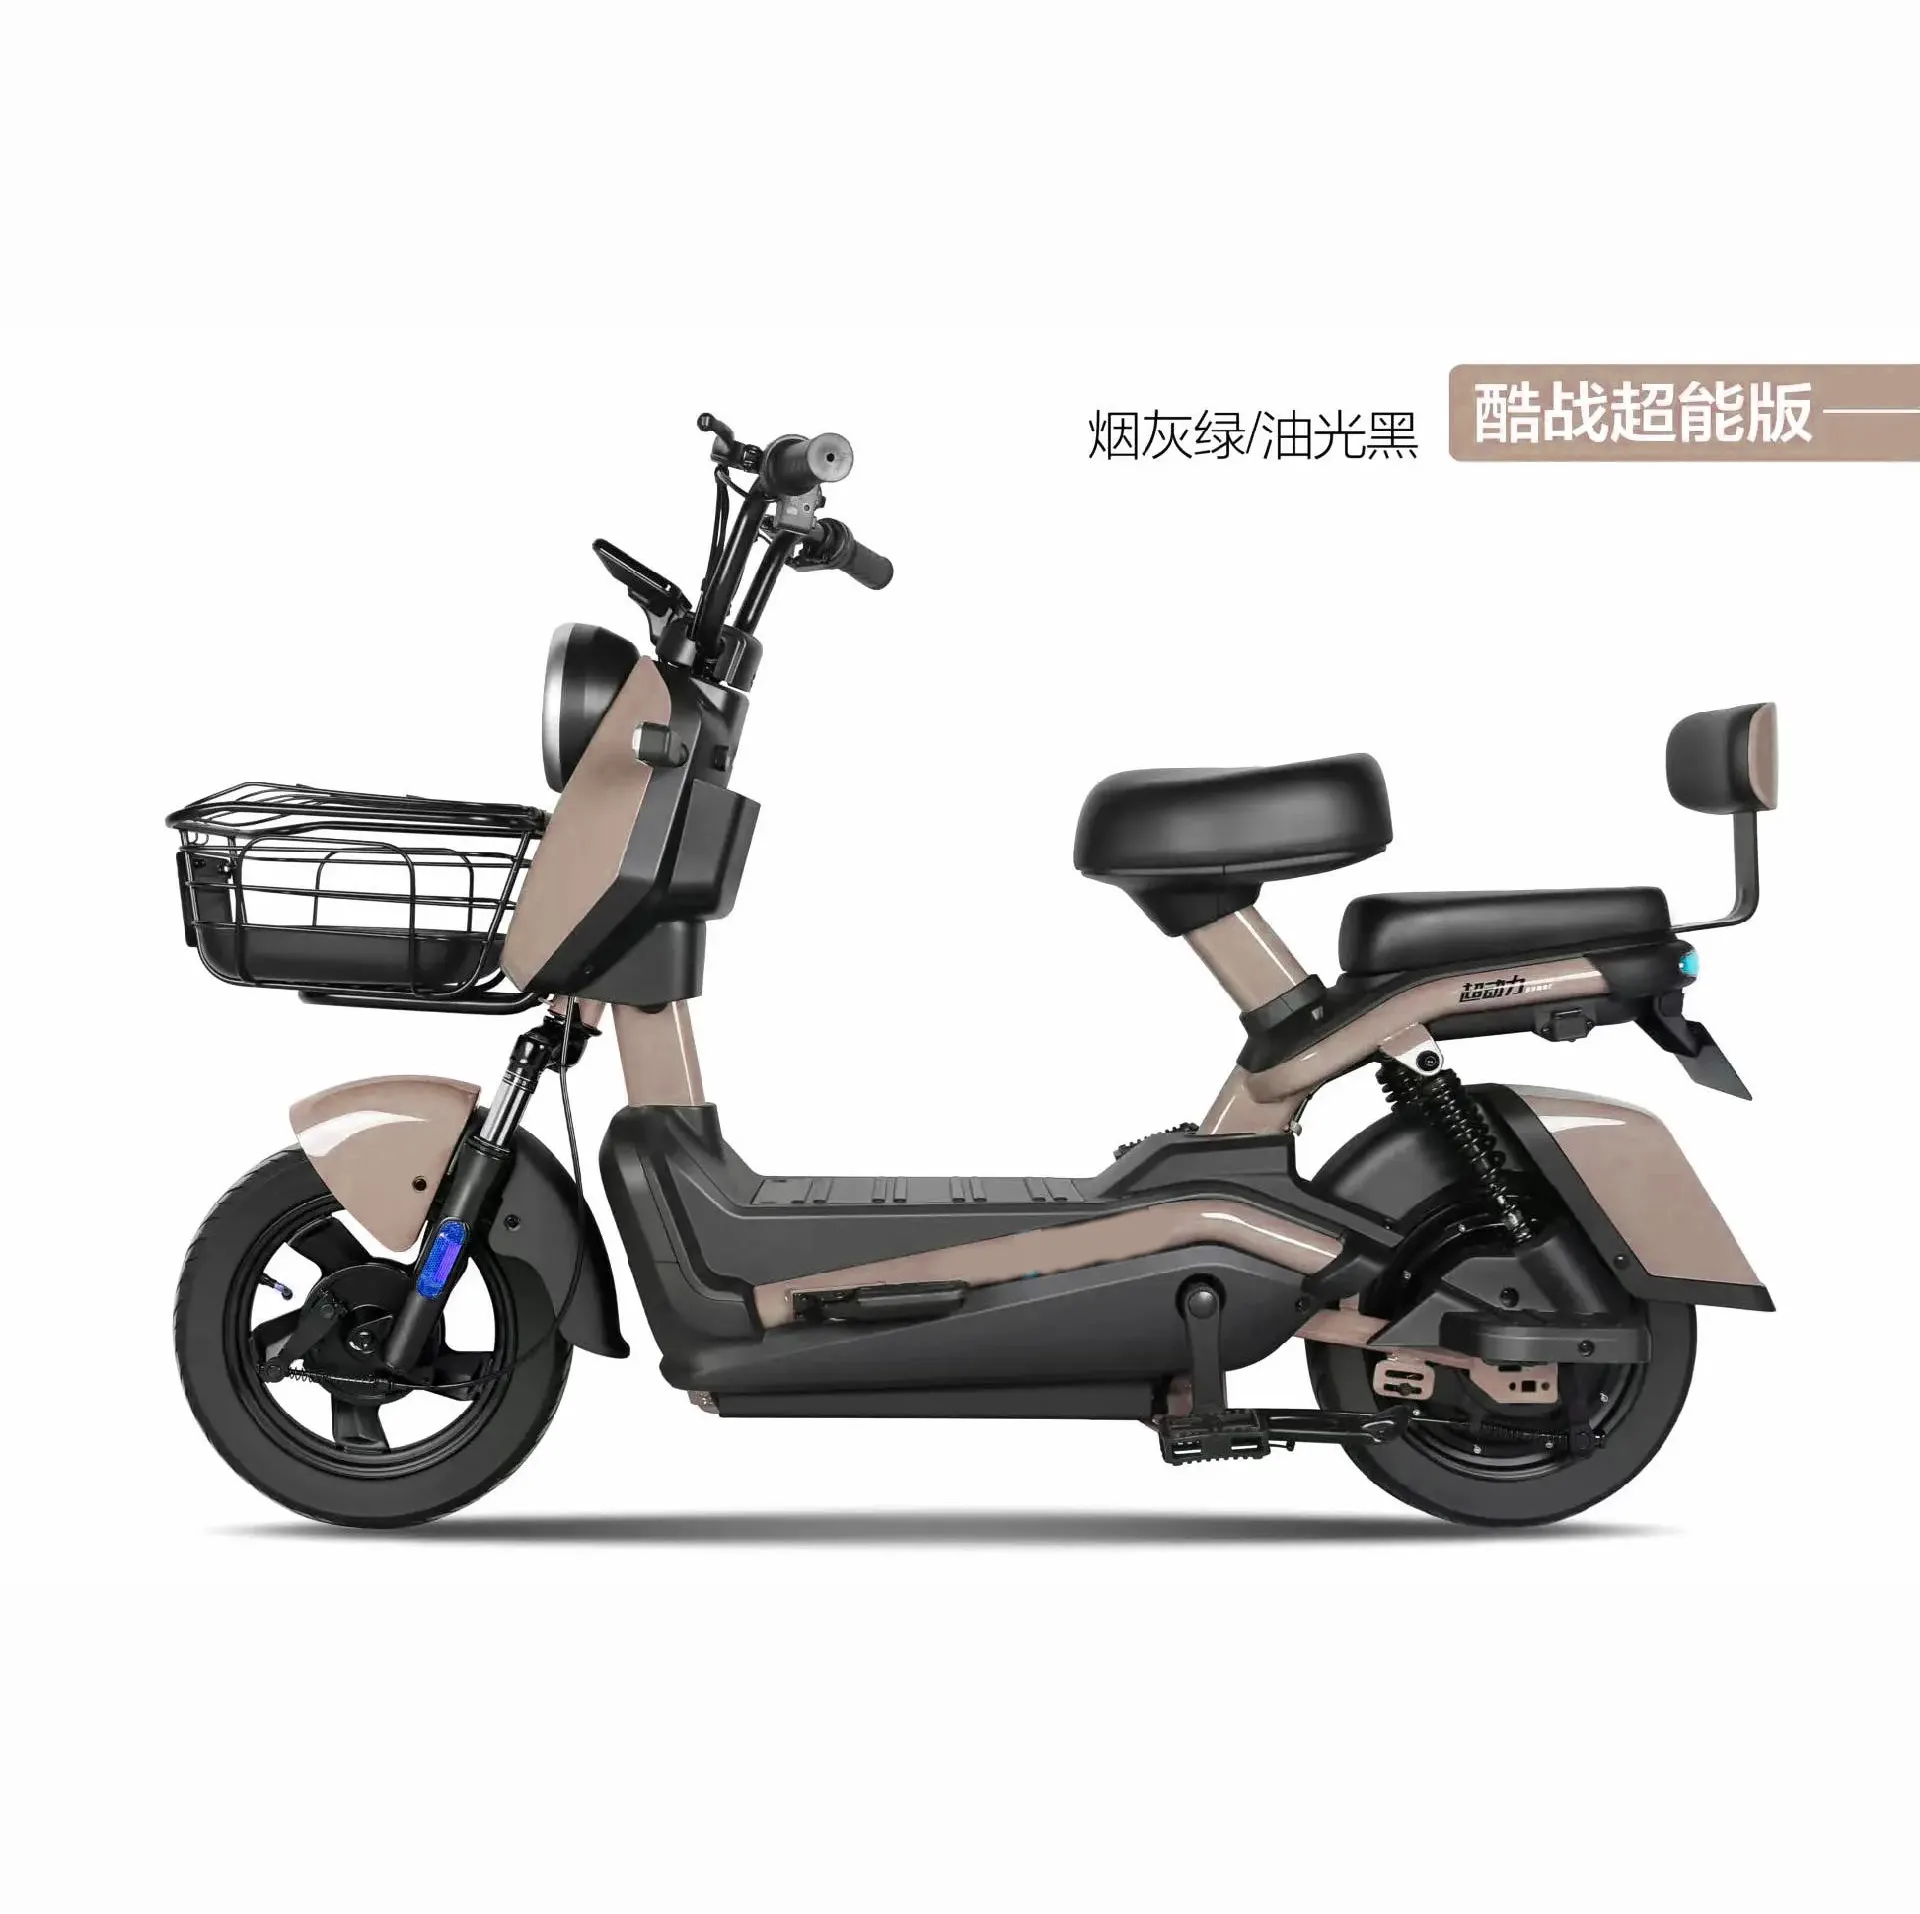 सिटी रोड इलेक्ट्रिक साइकिल के लिए आधुनिक ई बाइक निर्माता स्टॉक ई बाइक 750w चीन